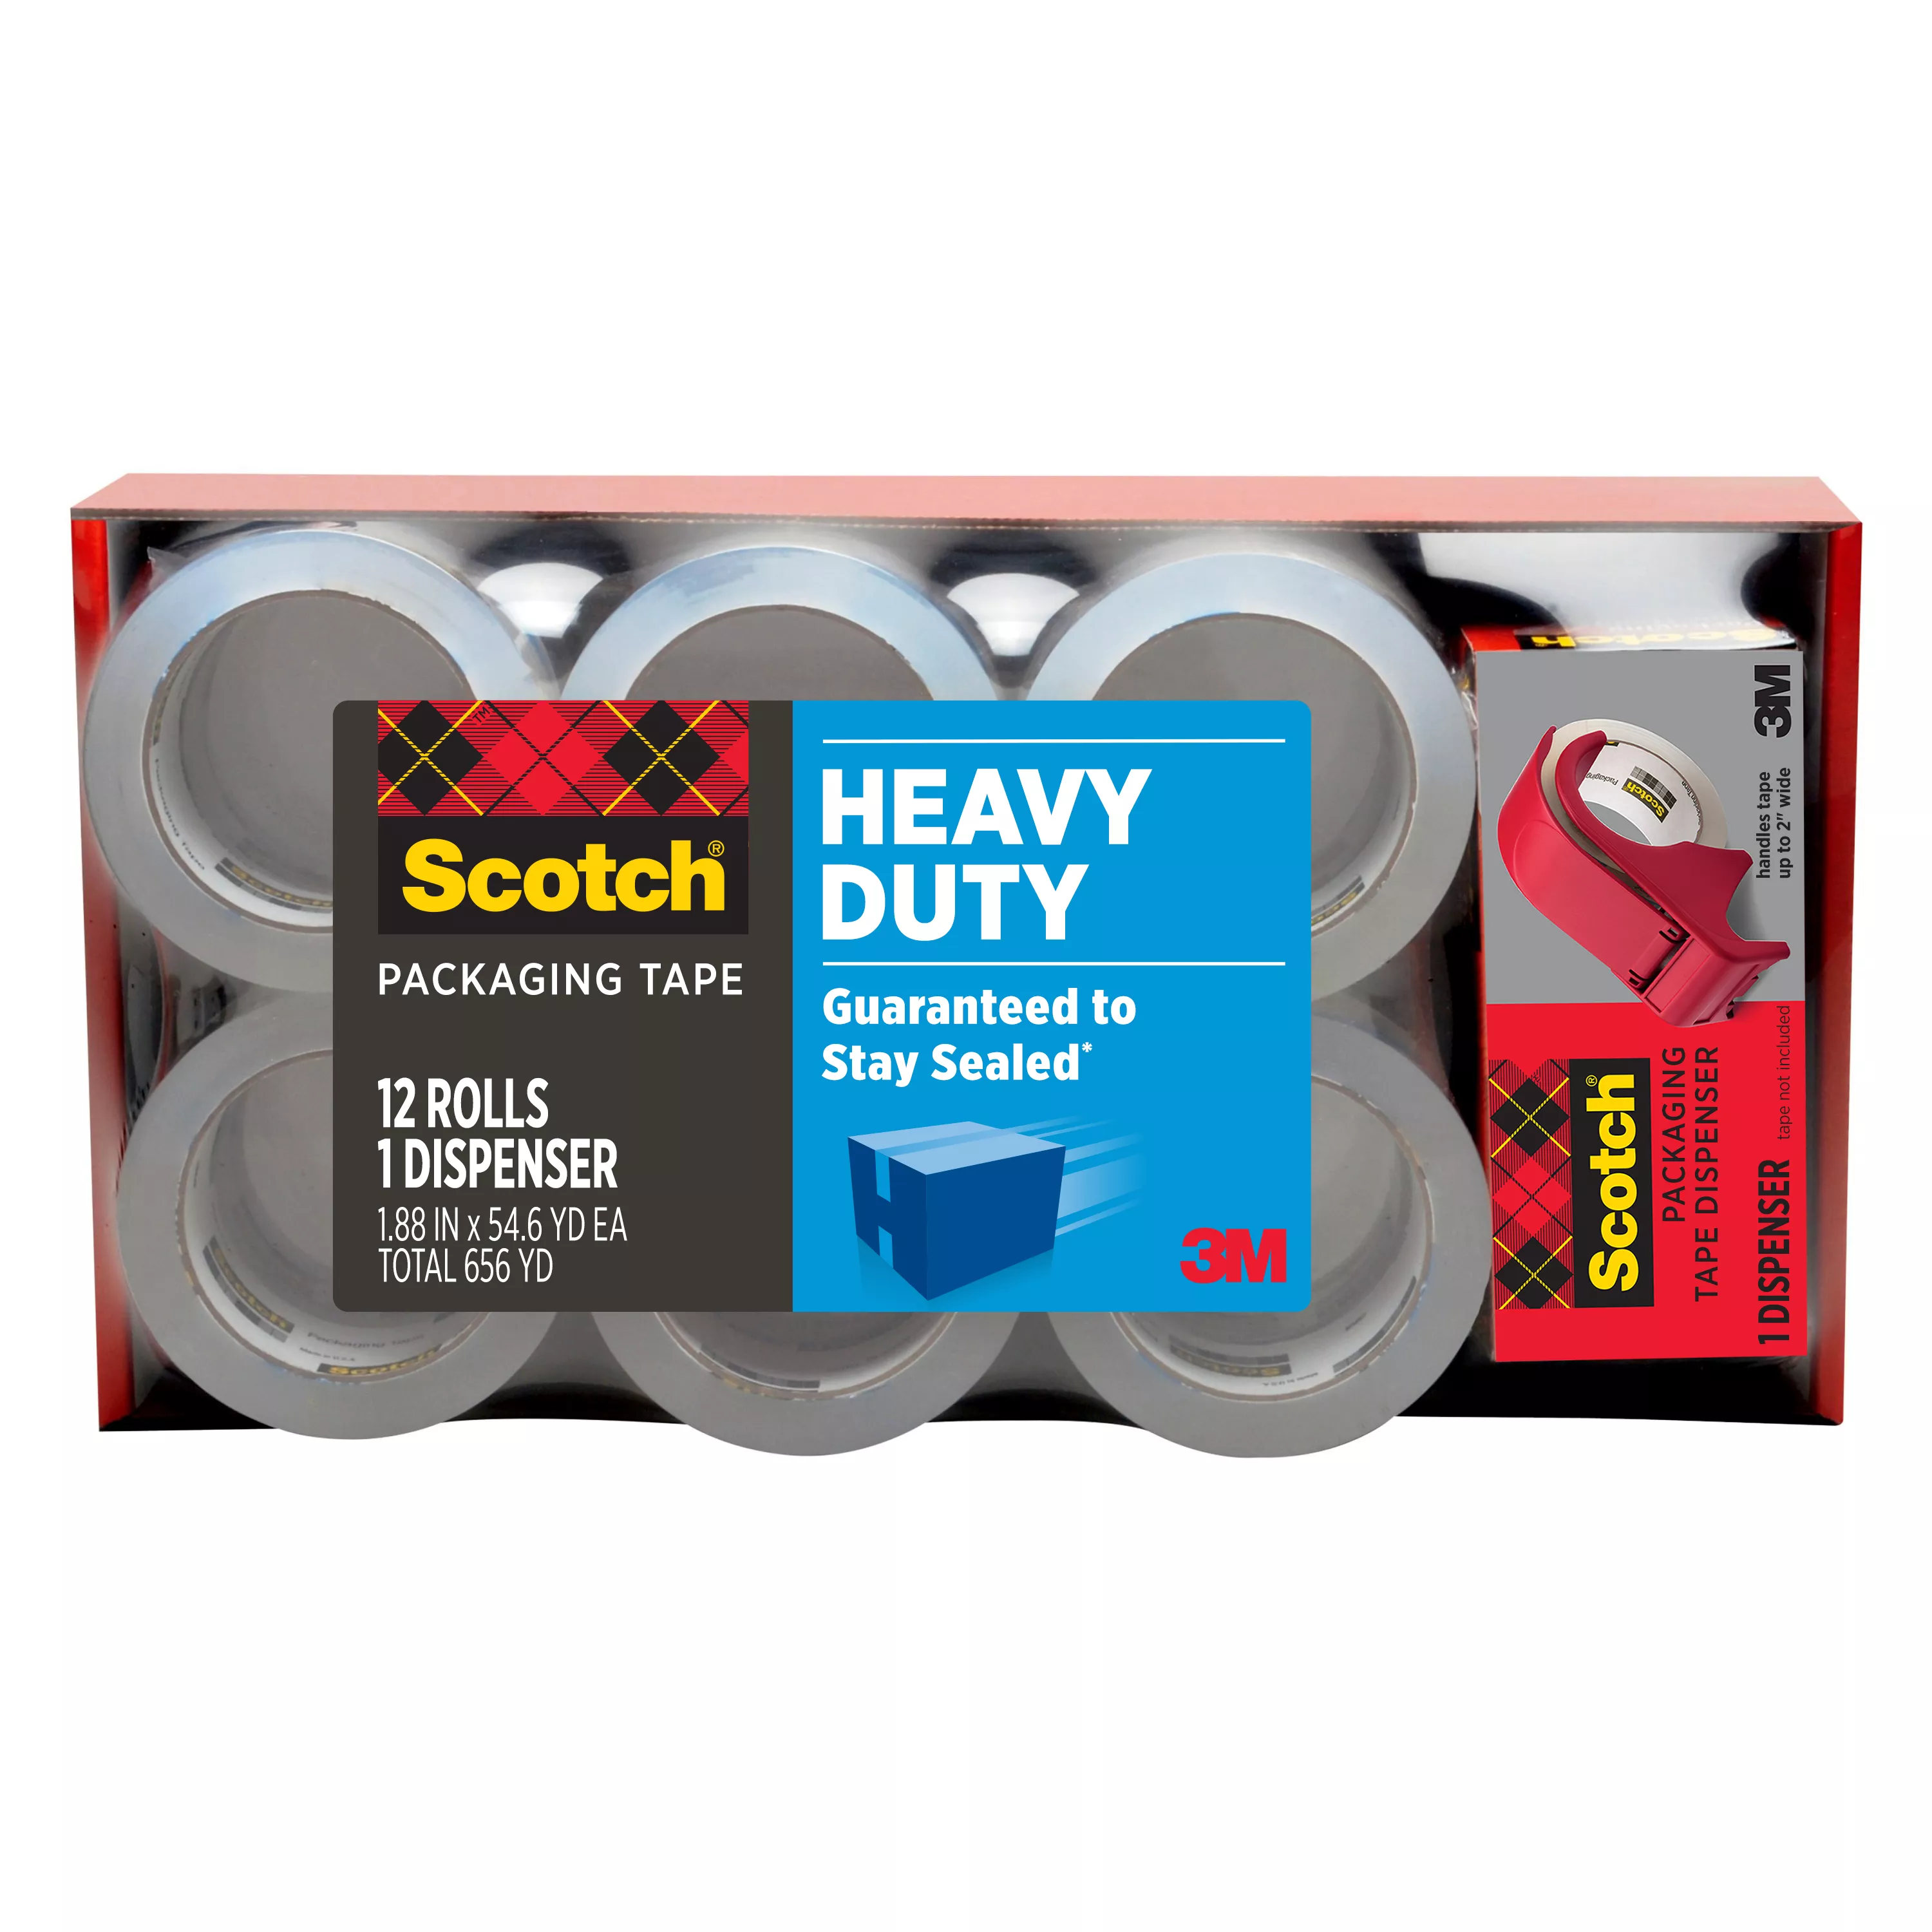 Scotch® Packaging Tape Heavy Duty Shipping, 3850-12-DP3, 1.88 in x 54.6
yd (48 mm x 50 m), 12 Rolls/Pack